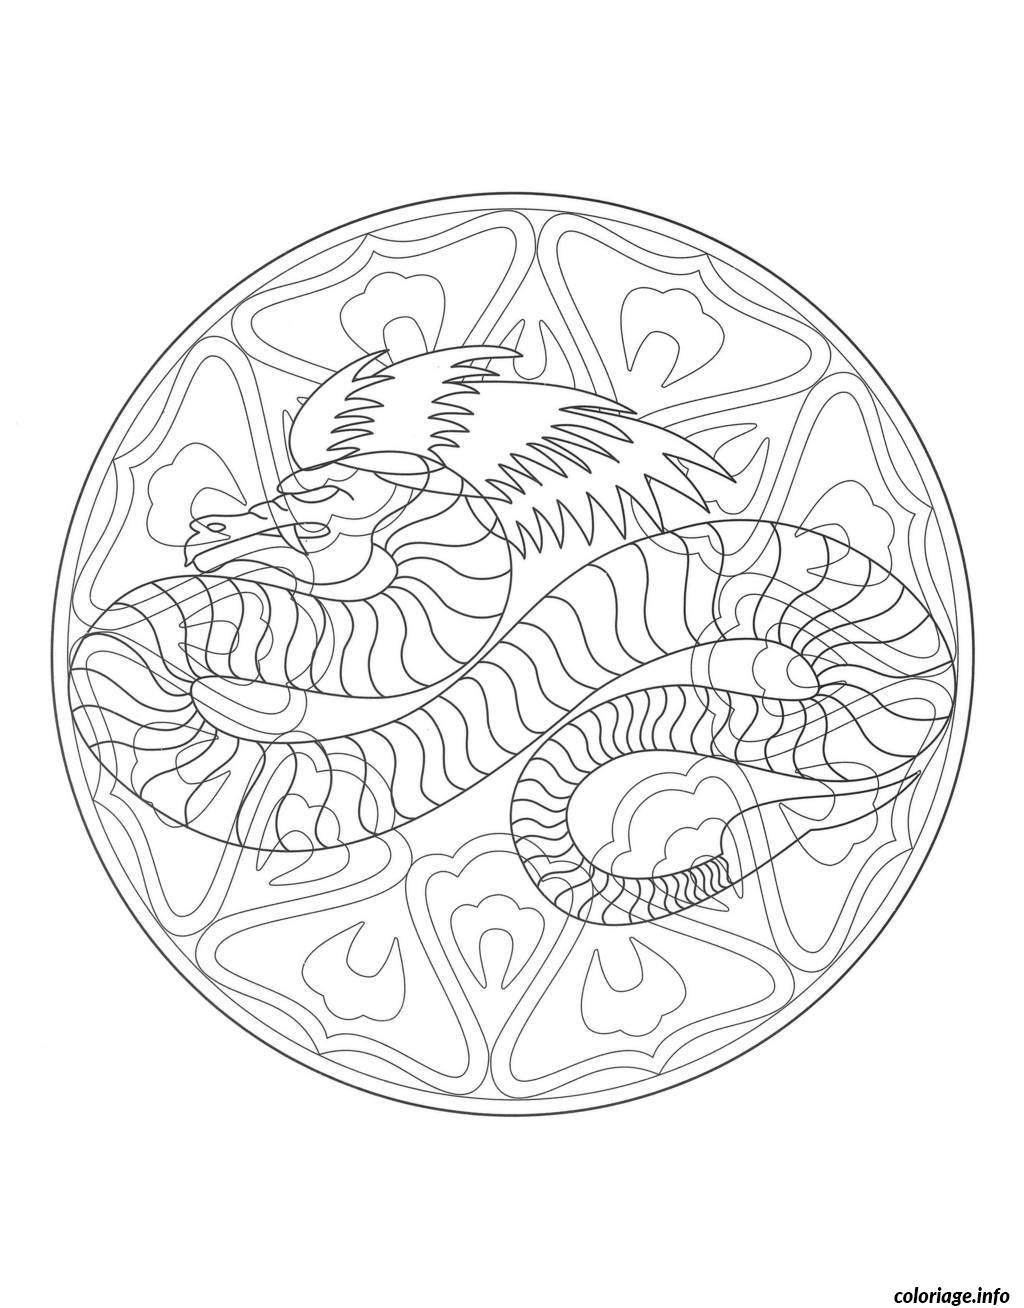 Dessin coloring mandala dragon 4  Coloriage Gratuit à Imprimer